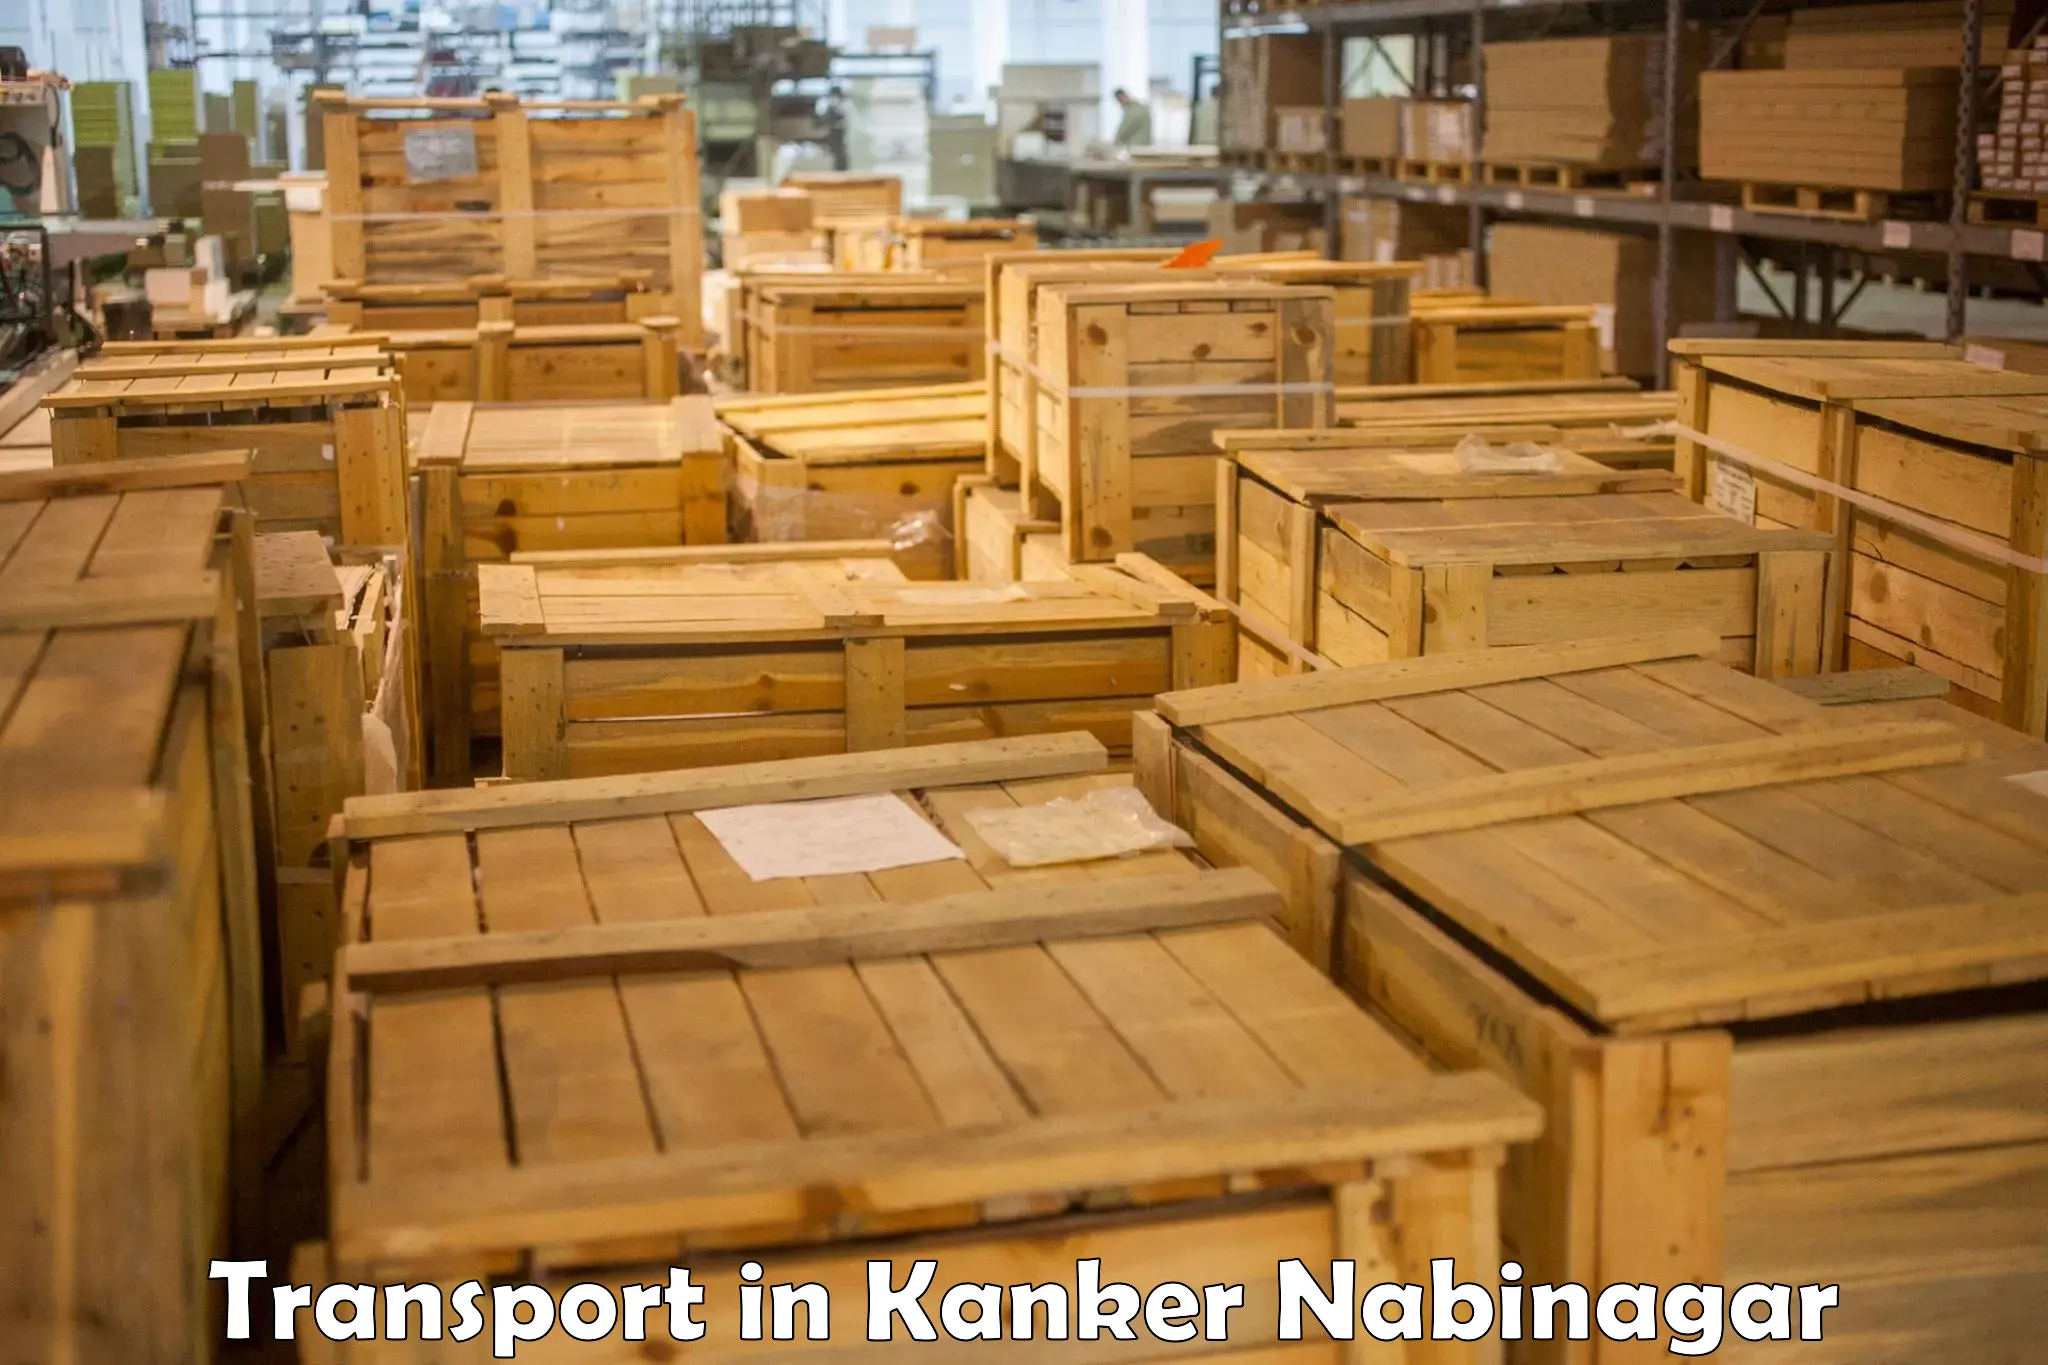 Truck transport companies in India in Kanker Nabinagar